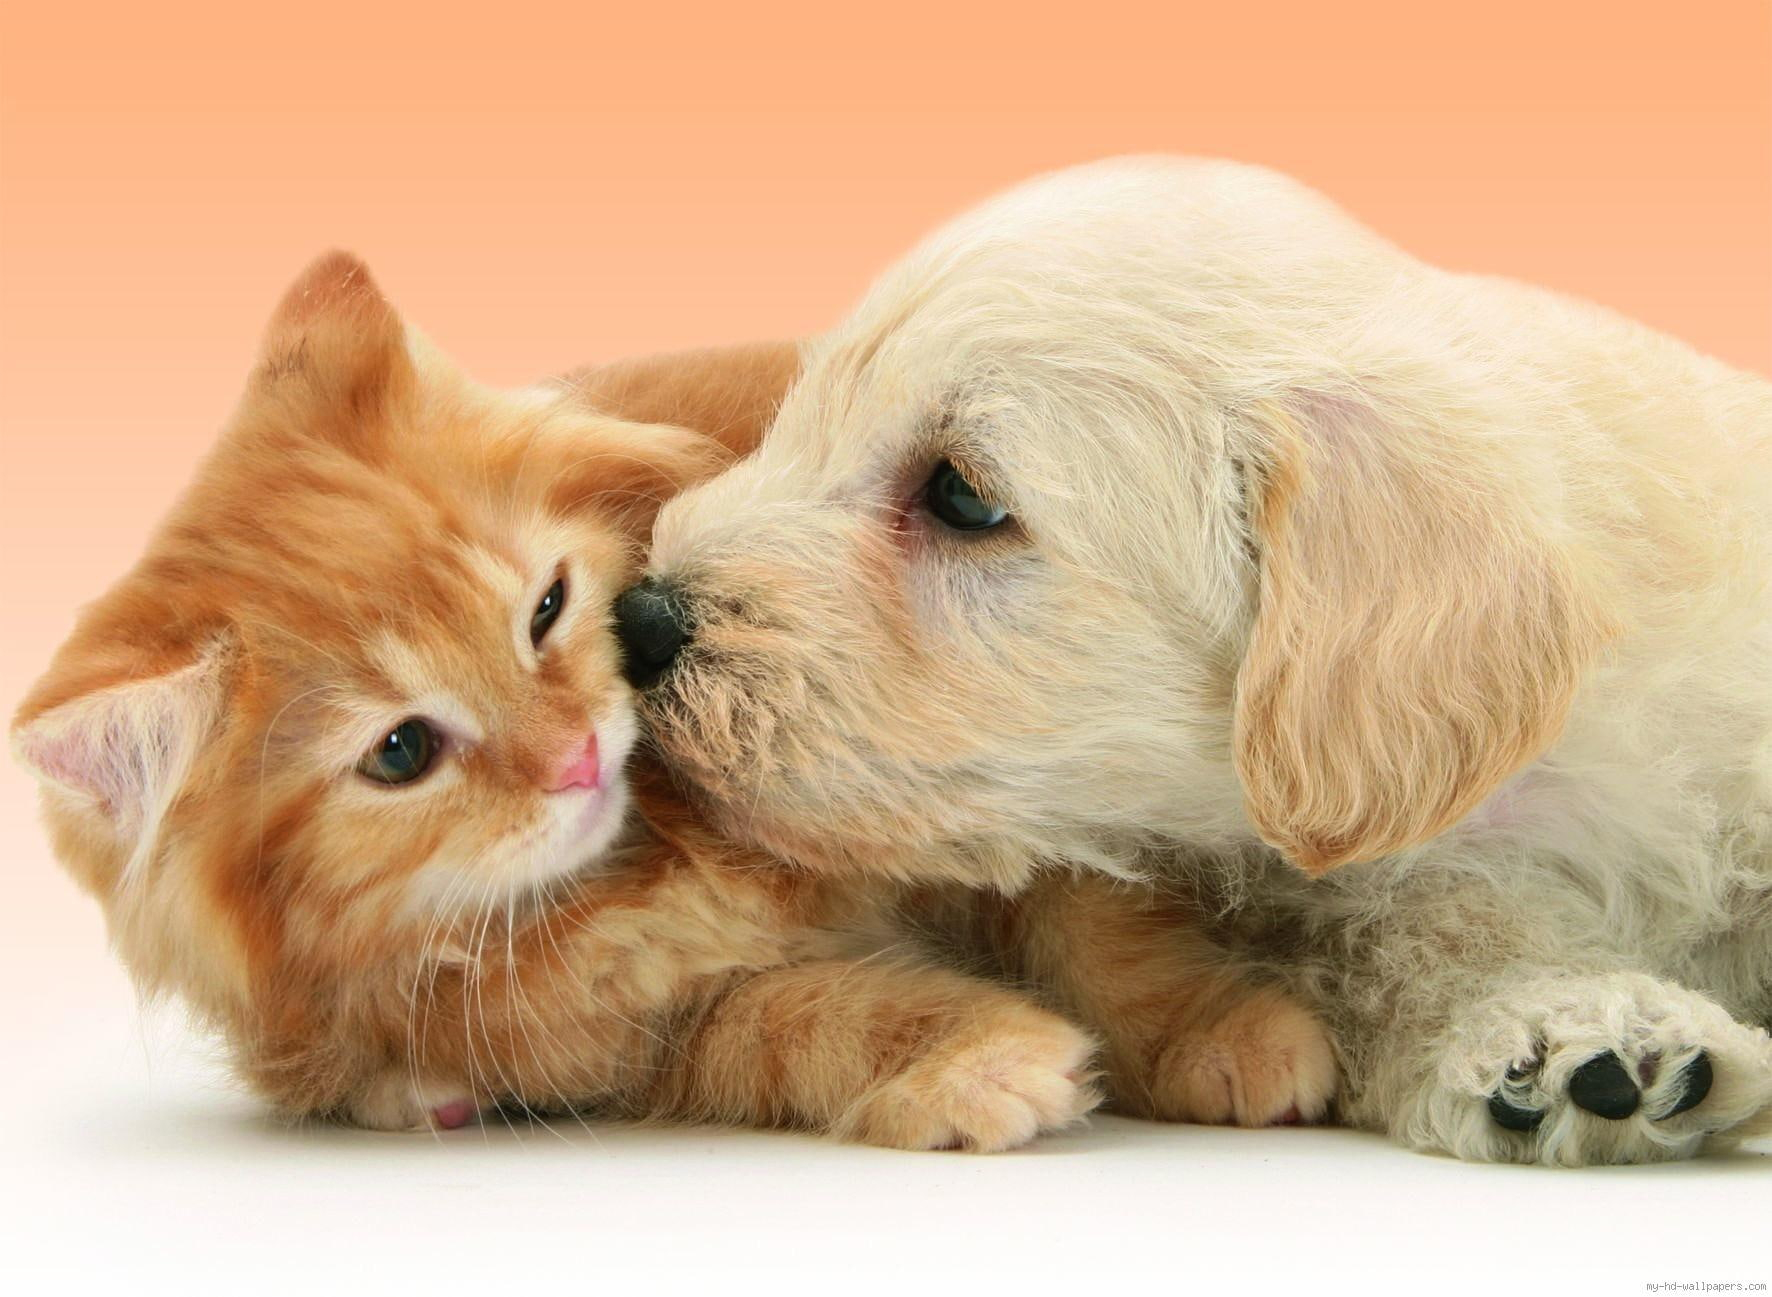 Puppy Dog Kissing Cat, Cat And Dog Wallpaper, Animal, Fun - Wallpaperforu